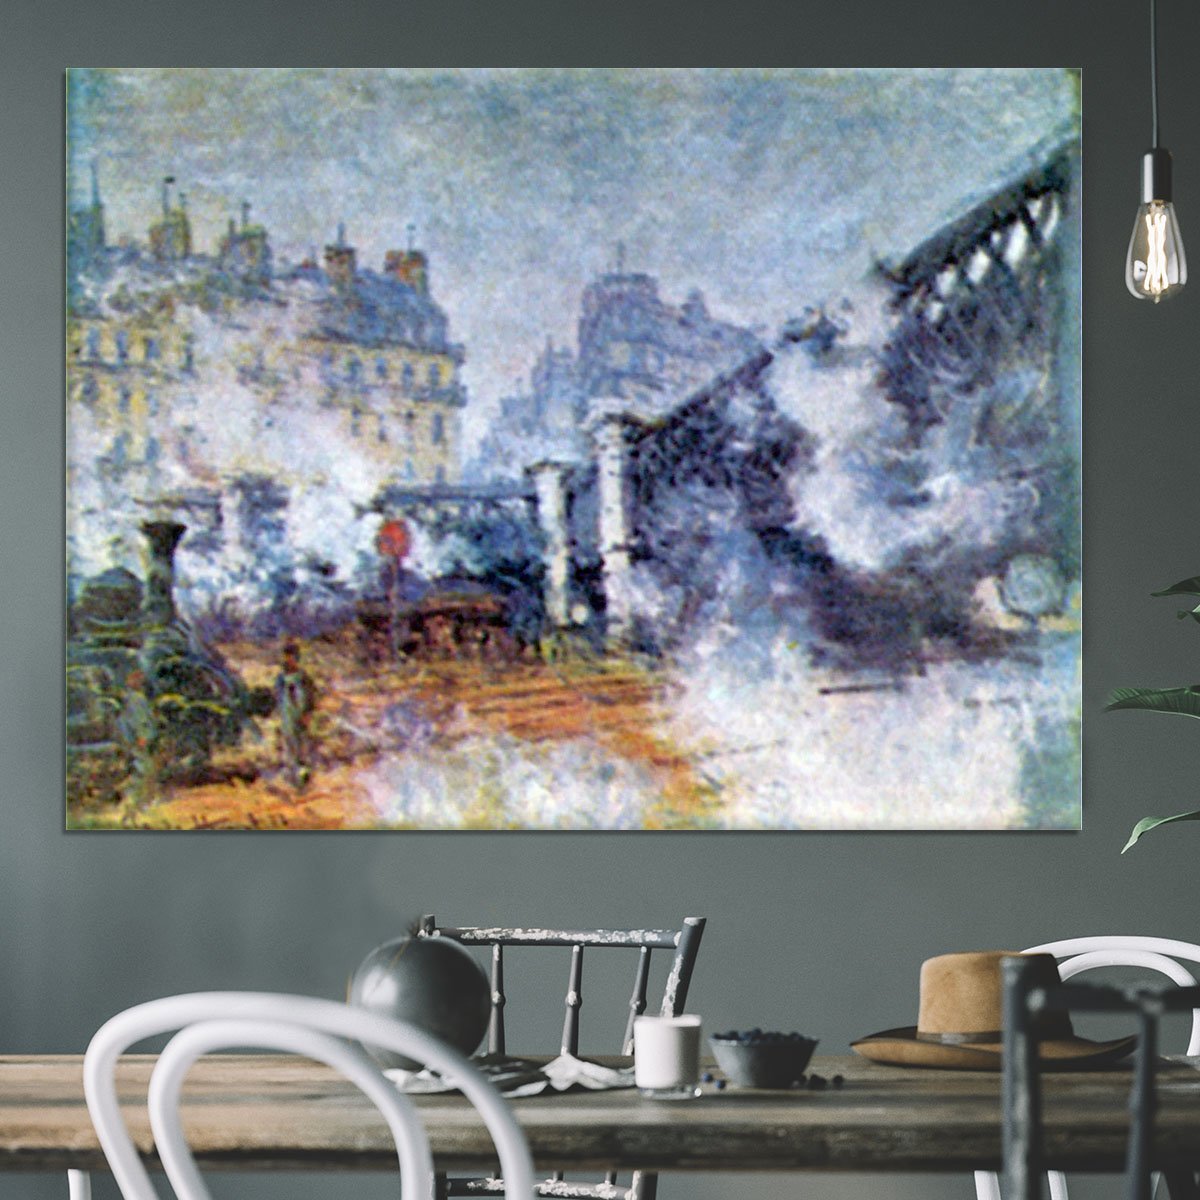 The Europe Bridge Saint Lazare station in Paris by Monet Canvas Print or Poster